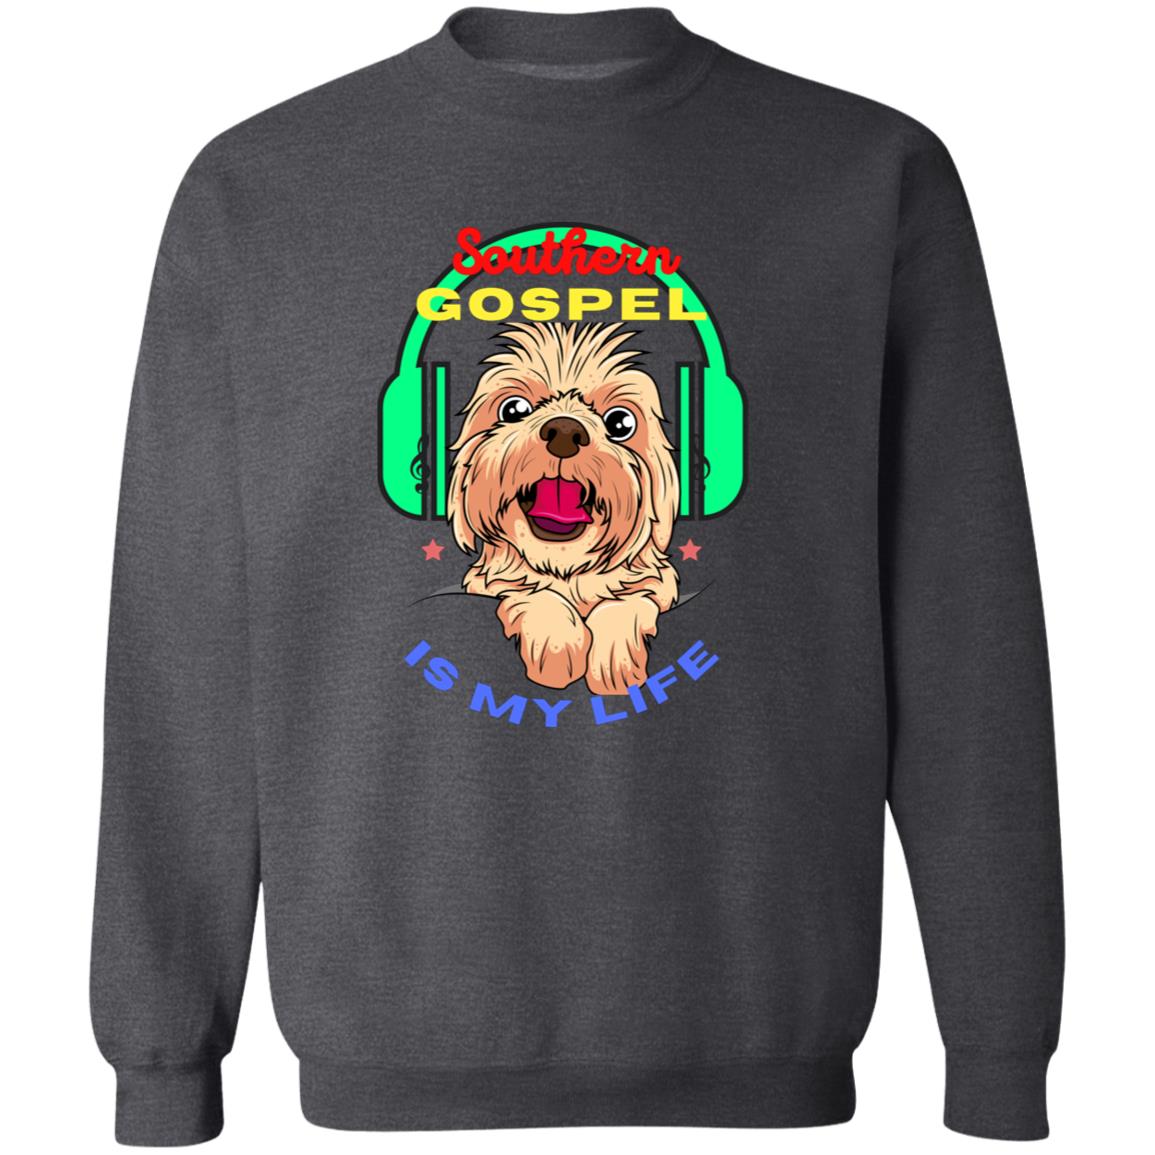 Southern Gospel Is My Life Crewneck Pullover Sweatshirt